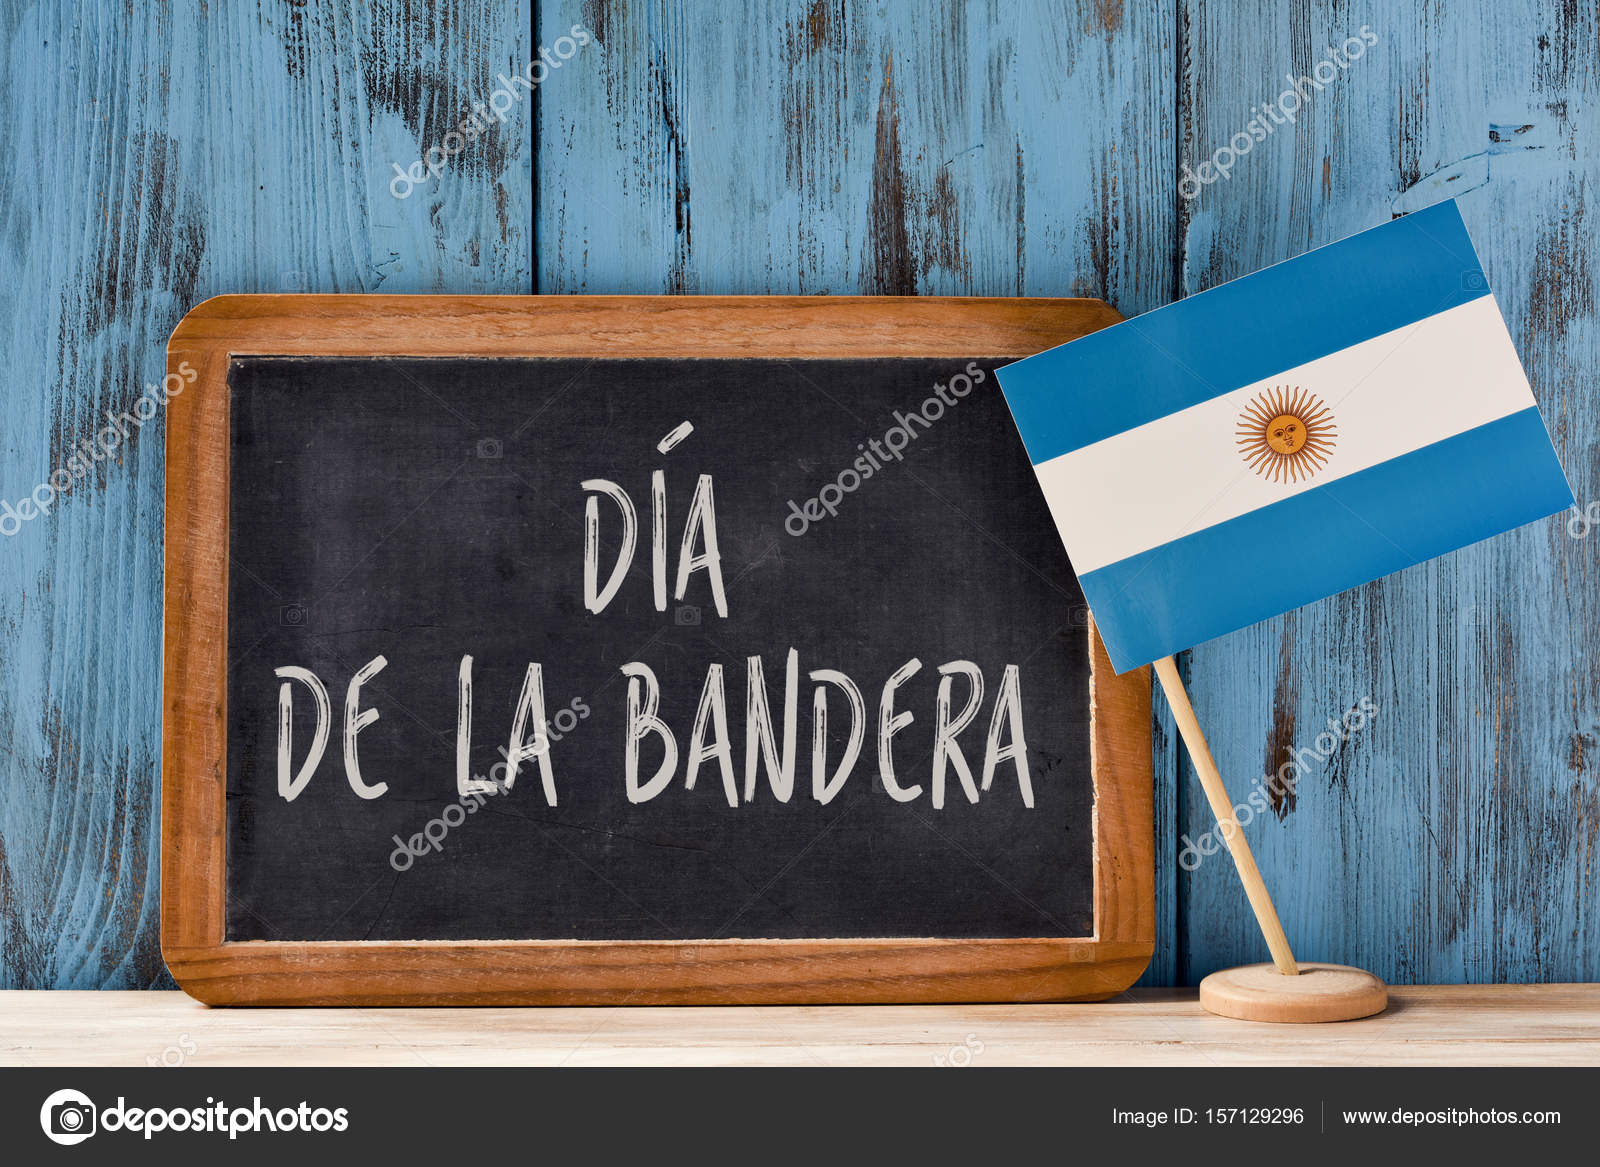 Dia De La Bandera Tag Der Argentinischen Flagge Stockfotografie Lizenzfreie Fotos C Nito103 157129296 Depositphotos